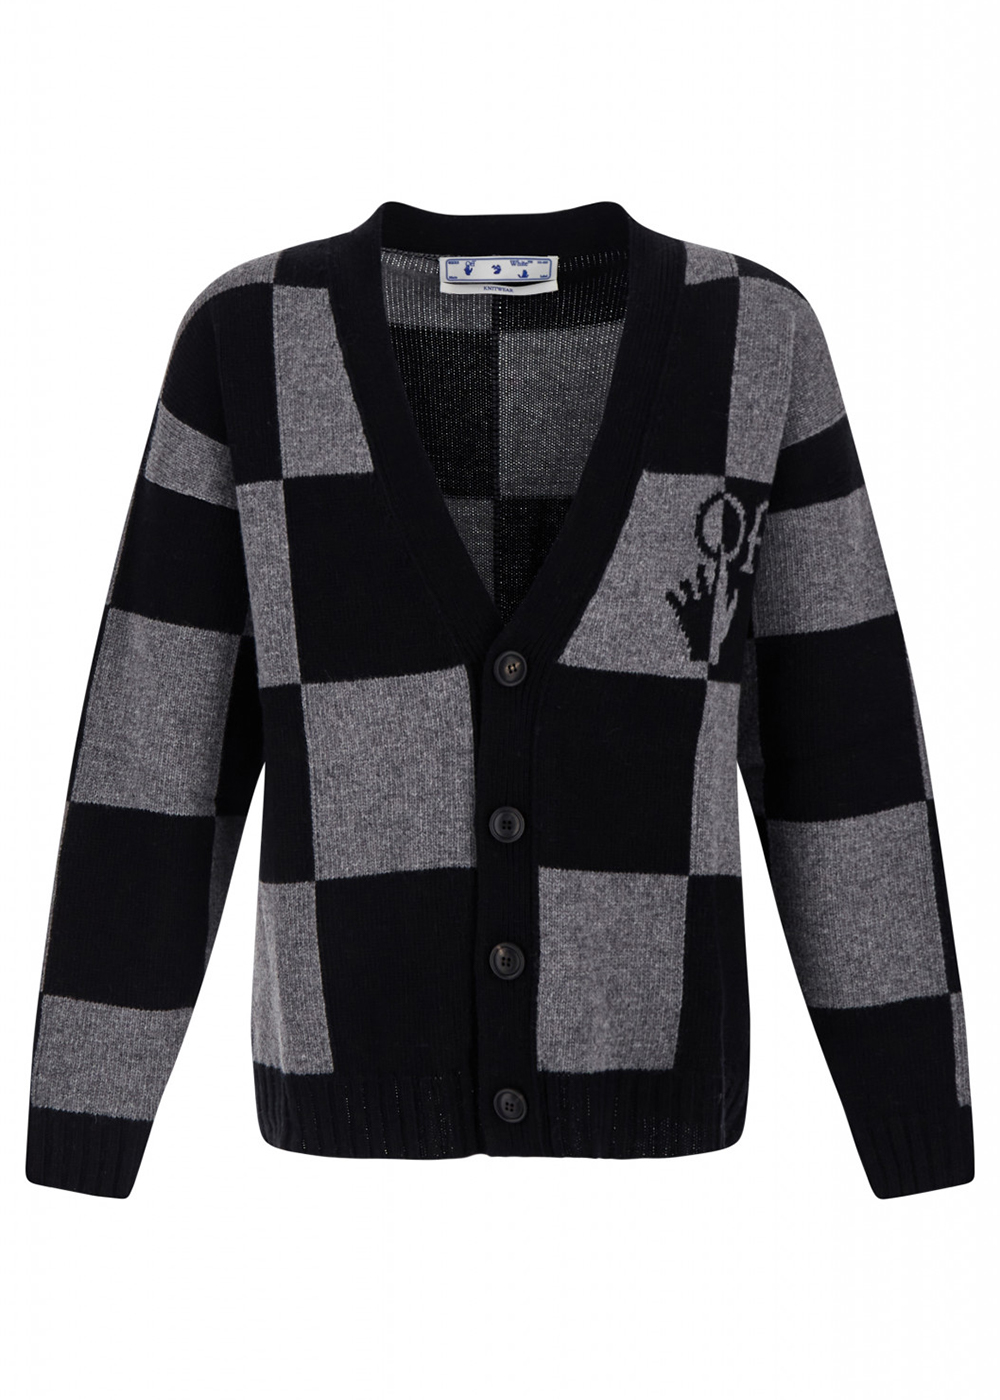 OFF WHITE Intarsia Pattern Check Knit Cardigan Grey Black - FW21